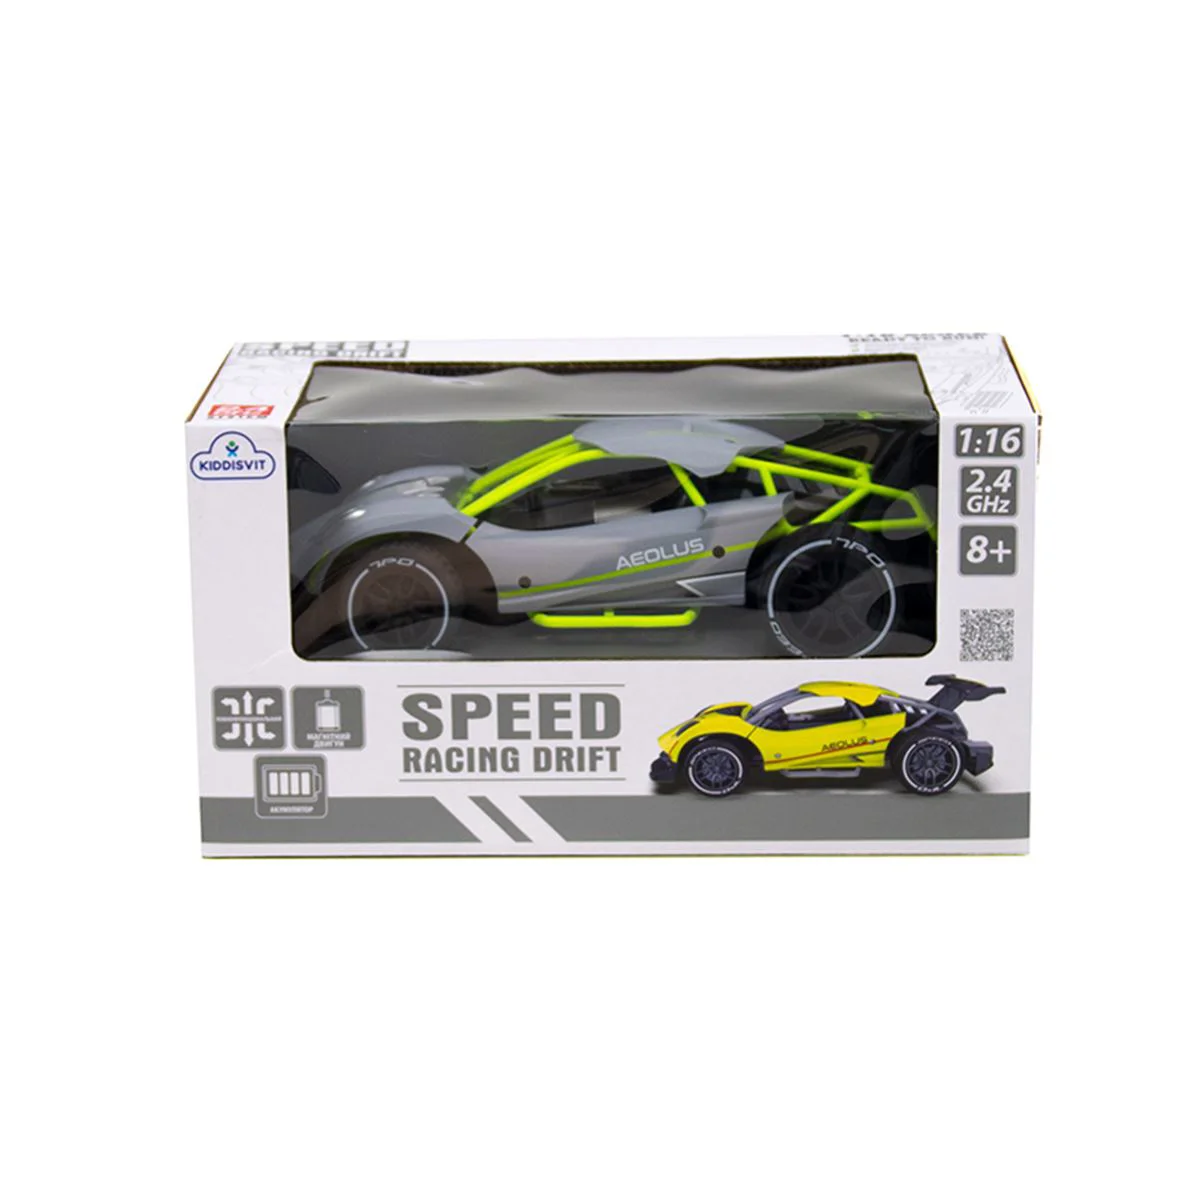 Masina cu RC Sulong Toys Speed Racing Drift Aeolus Gri, 1:16